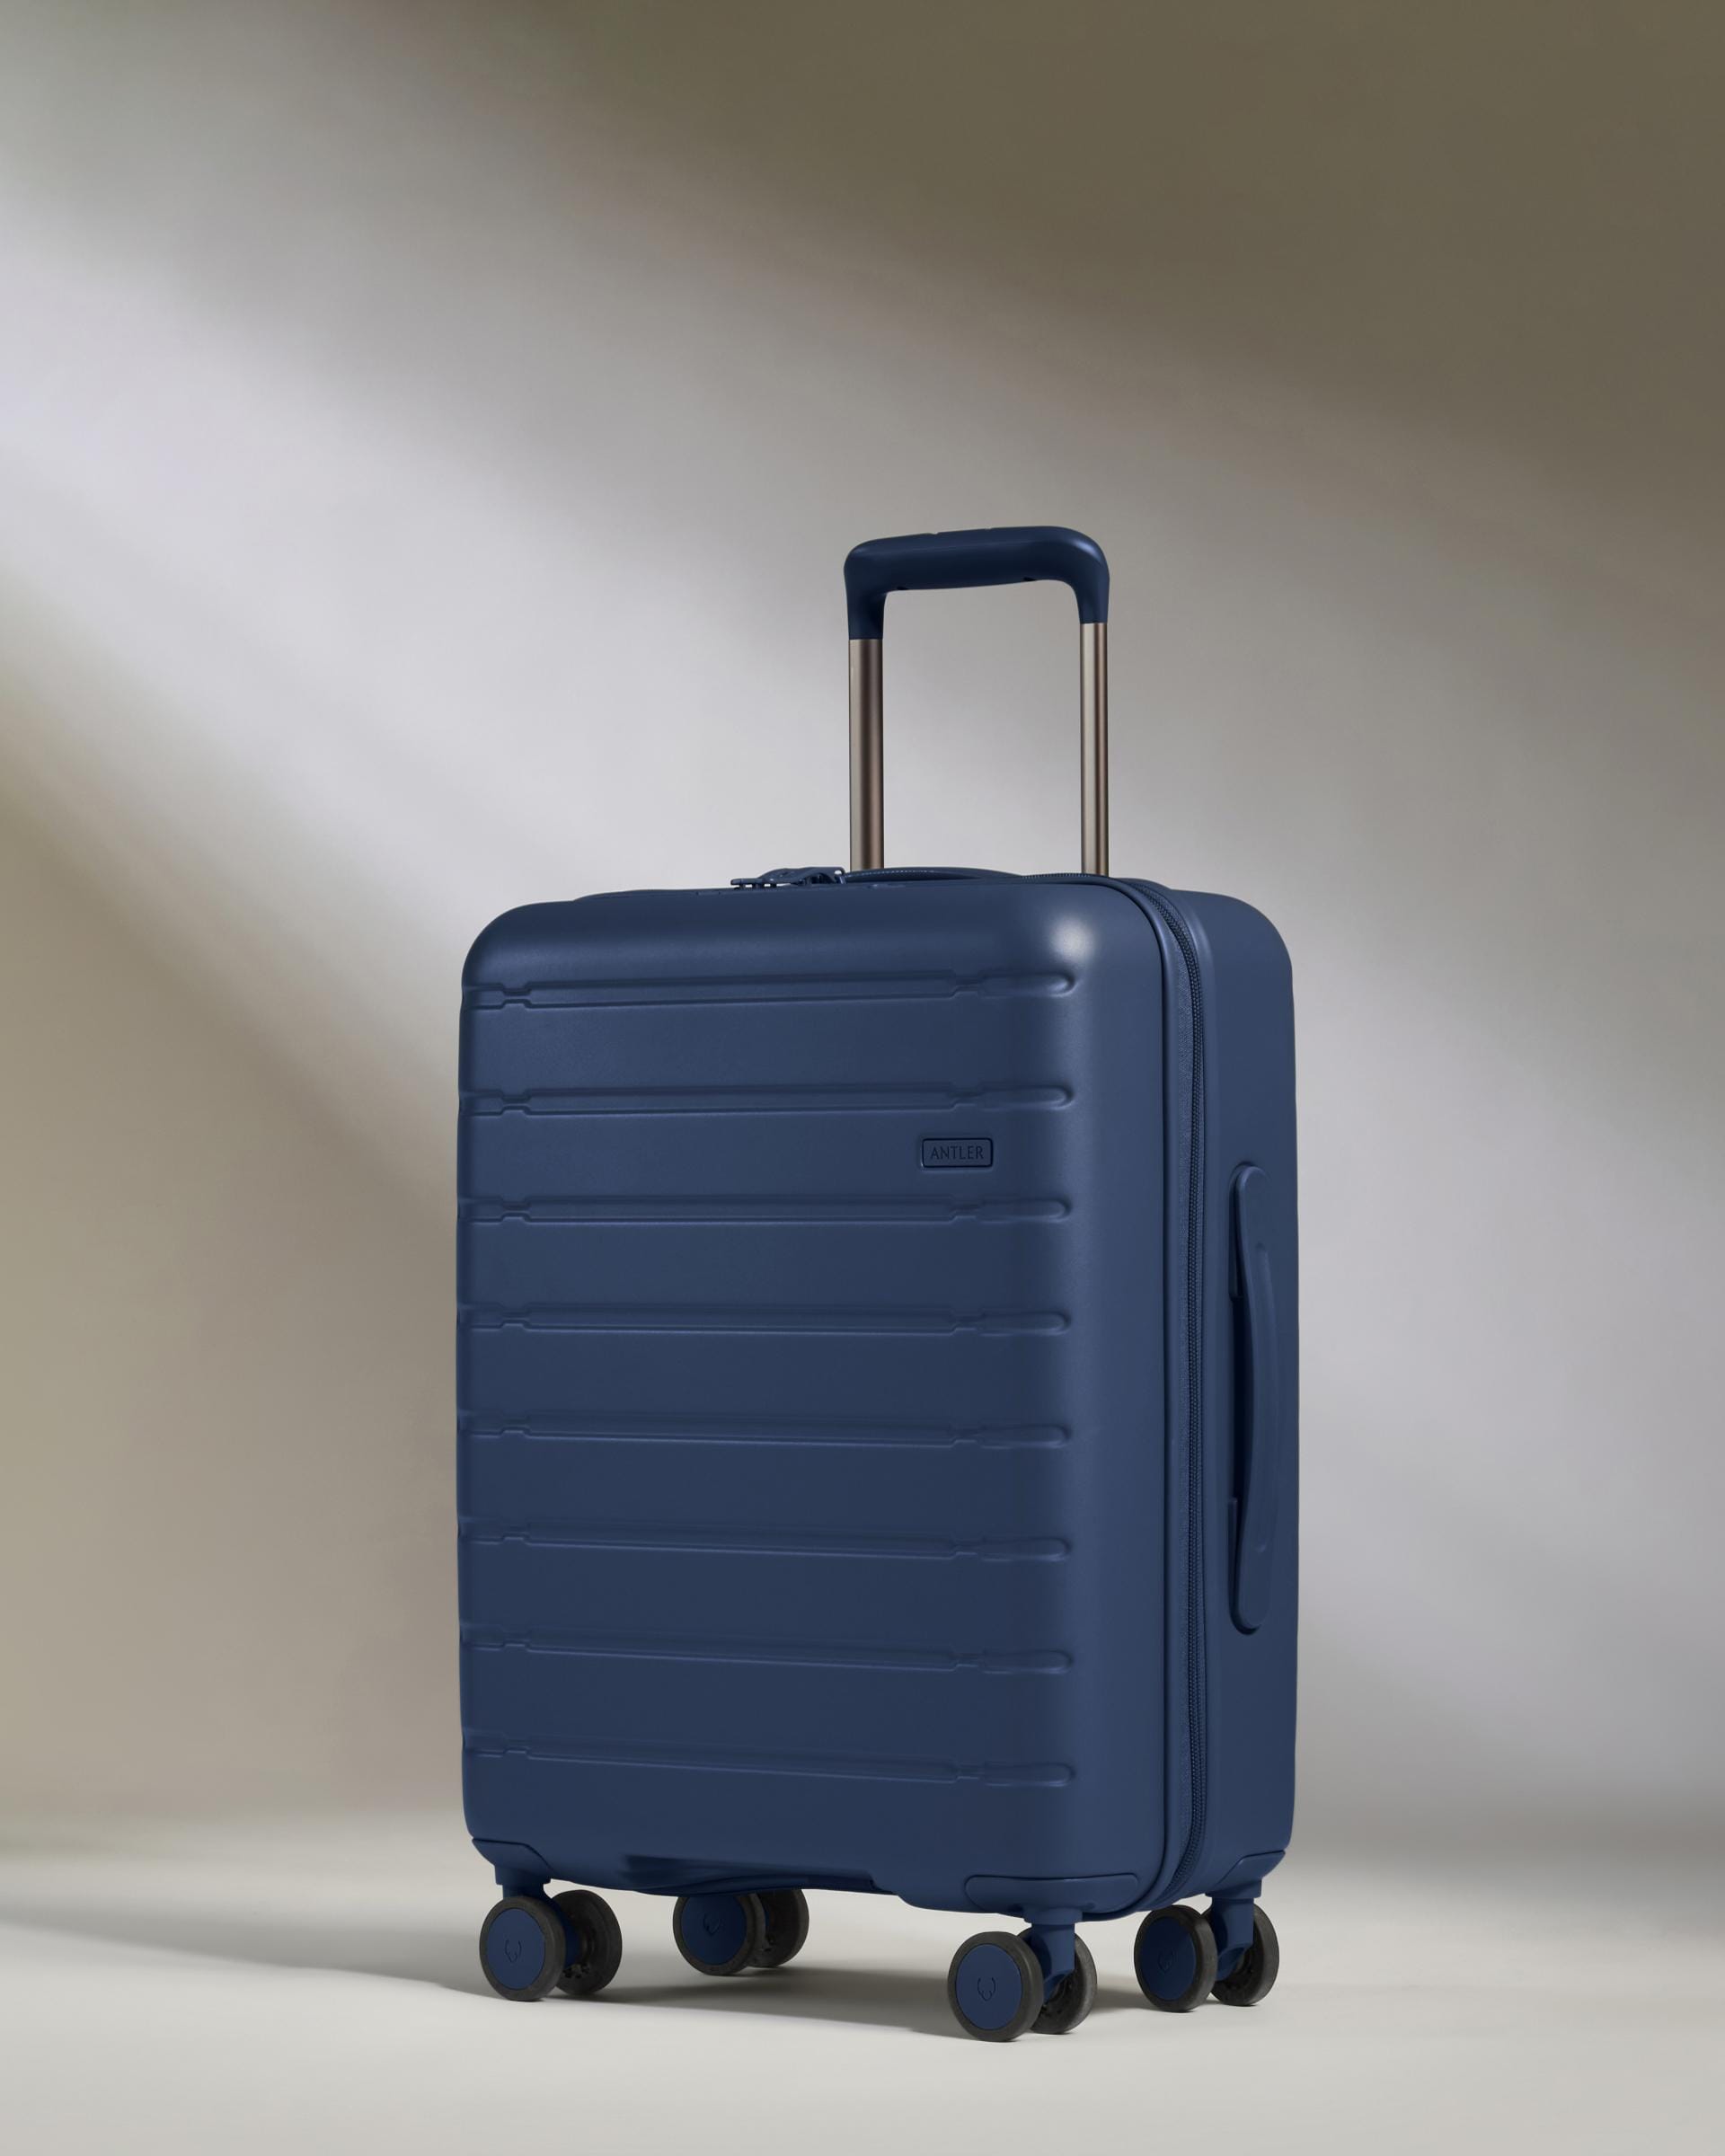 View Antler Stamford 20 Cabin Suitcase In Dusk Blue Size 20cm x 402cm x 541cm information